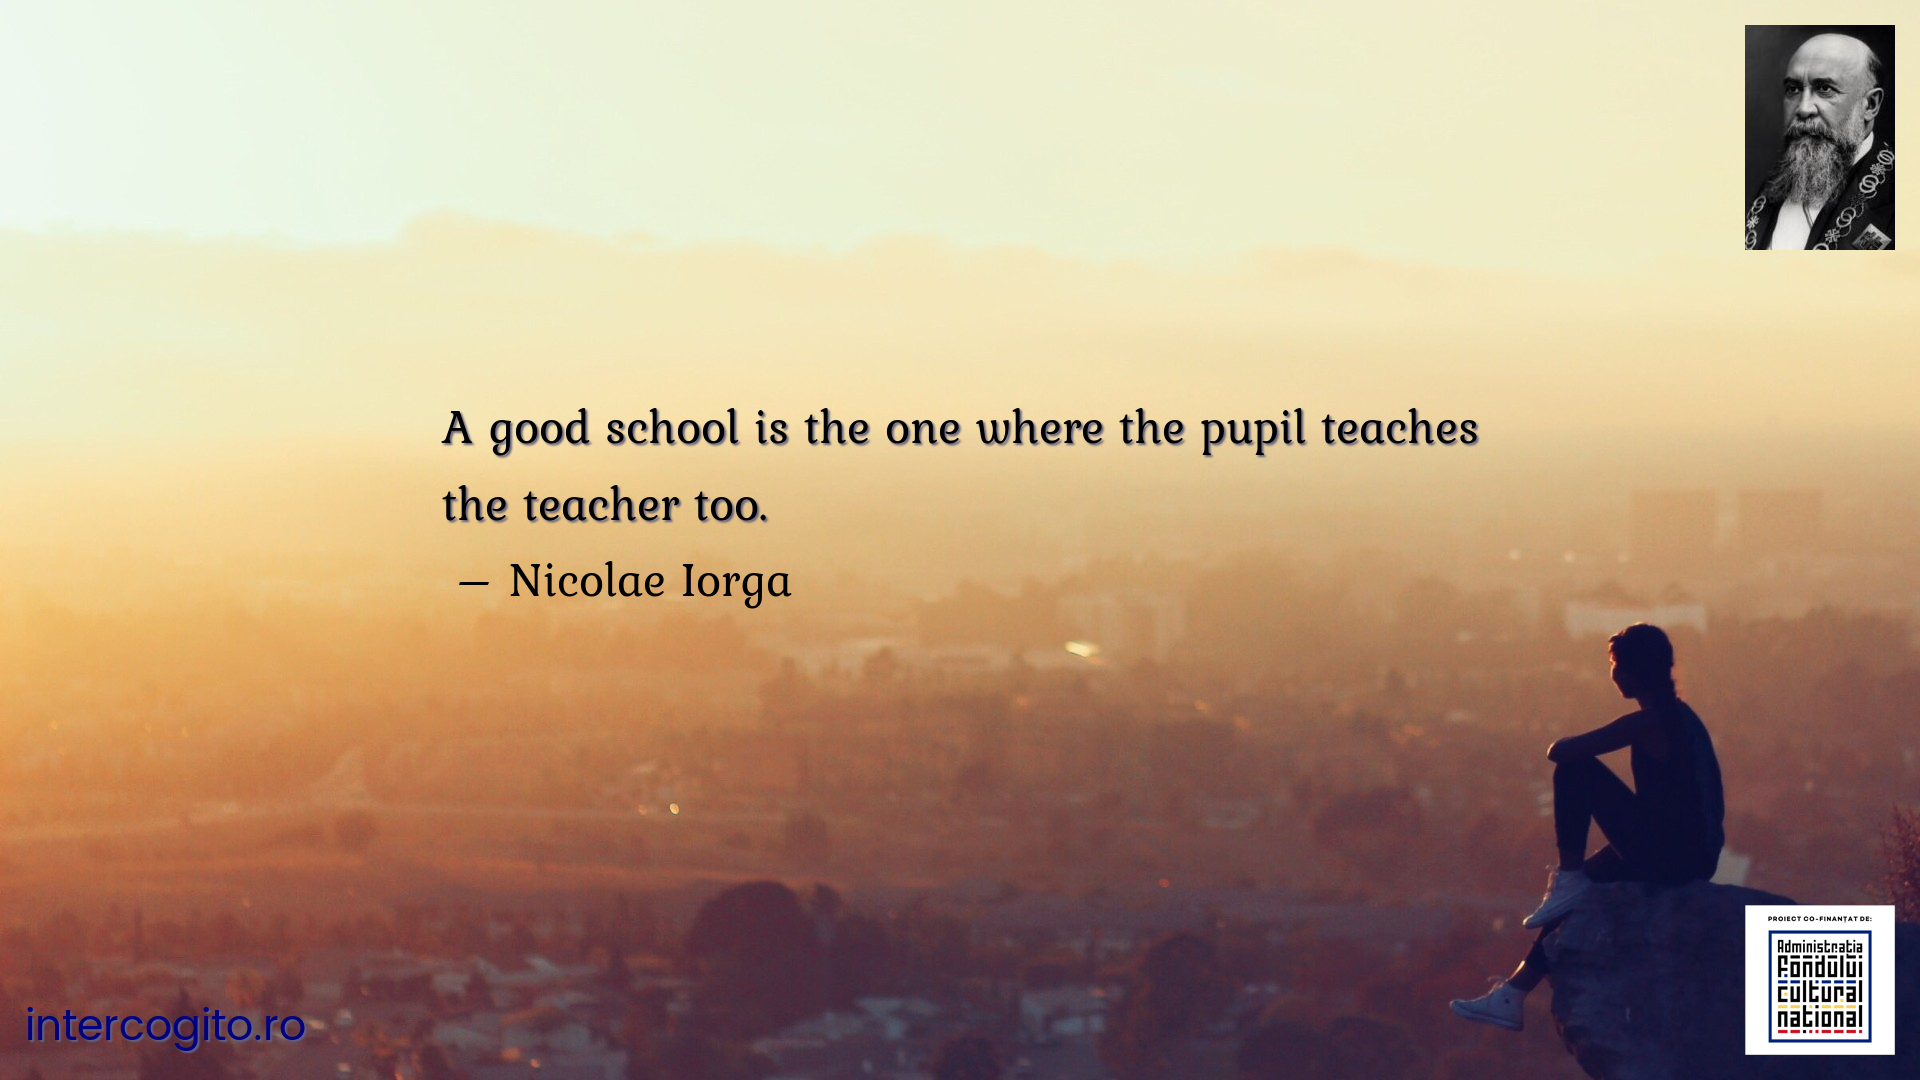 A good school is the one where the pupil teaches the teacher too.